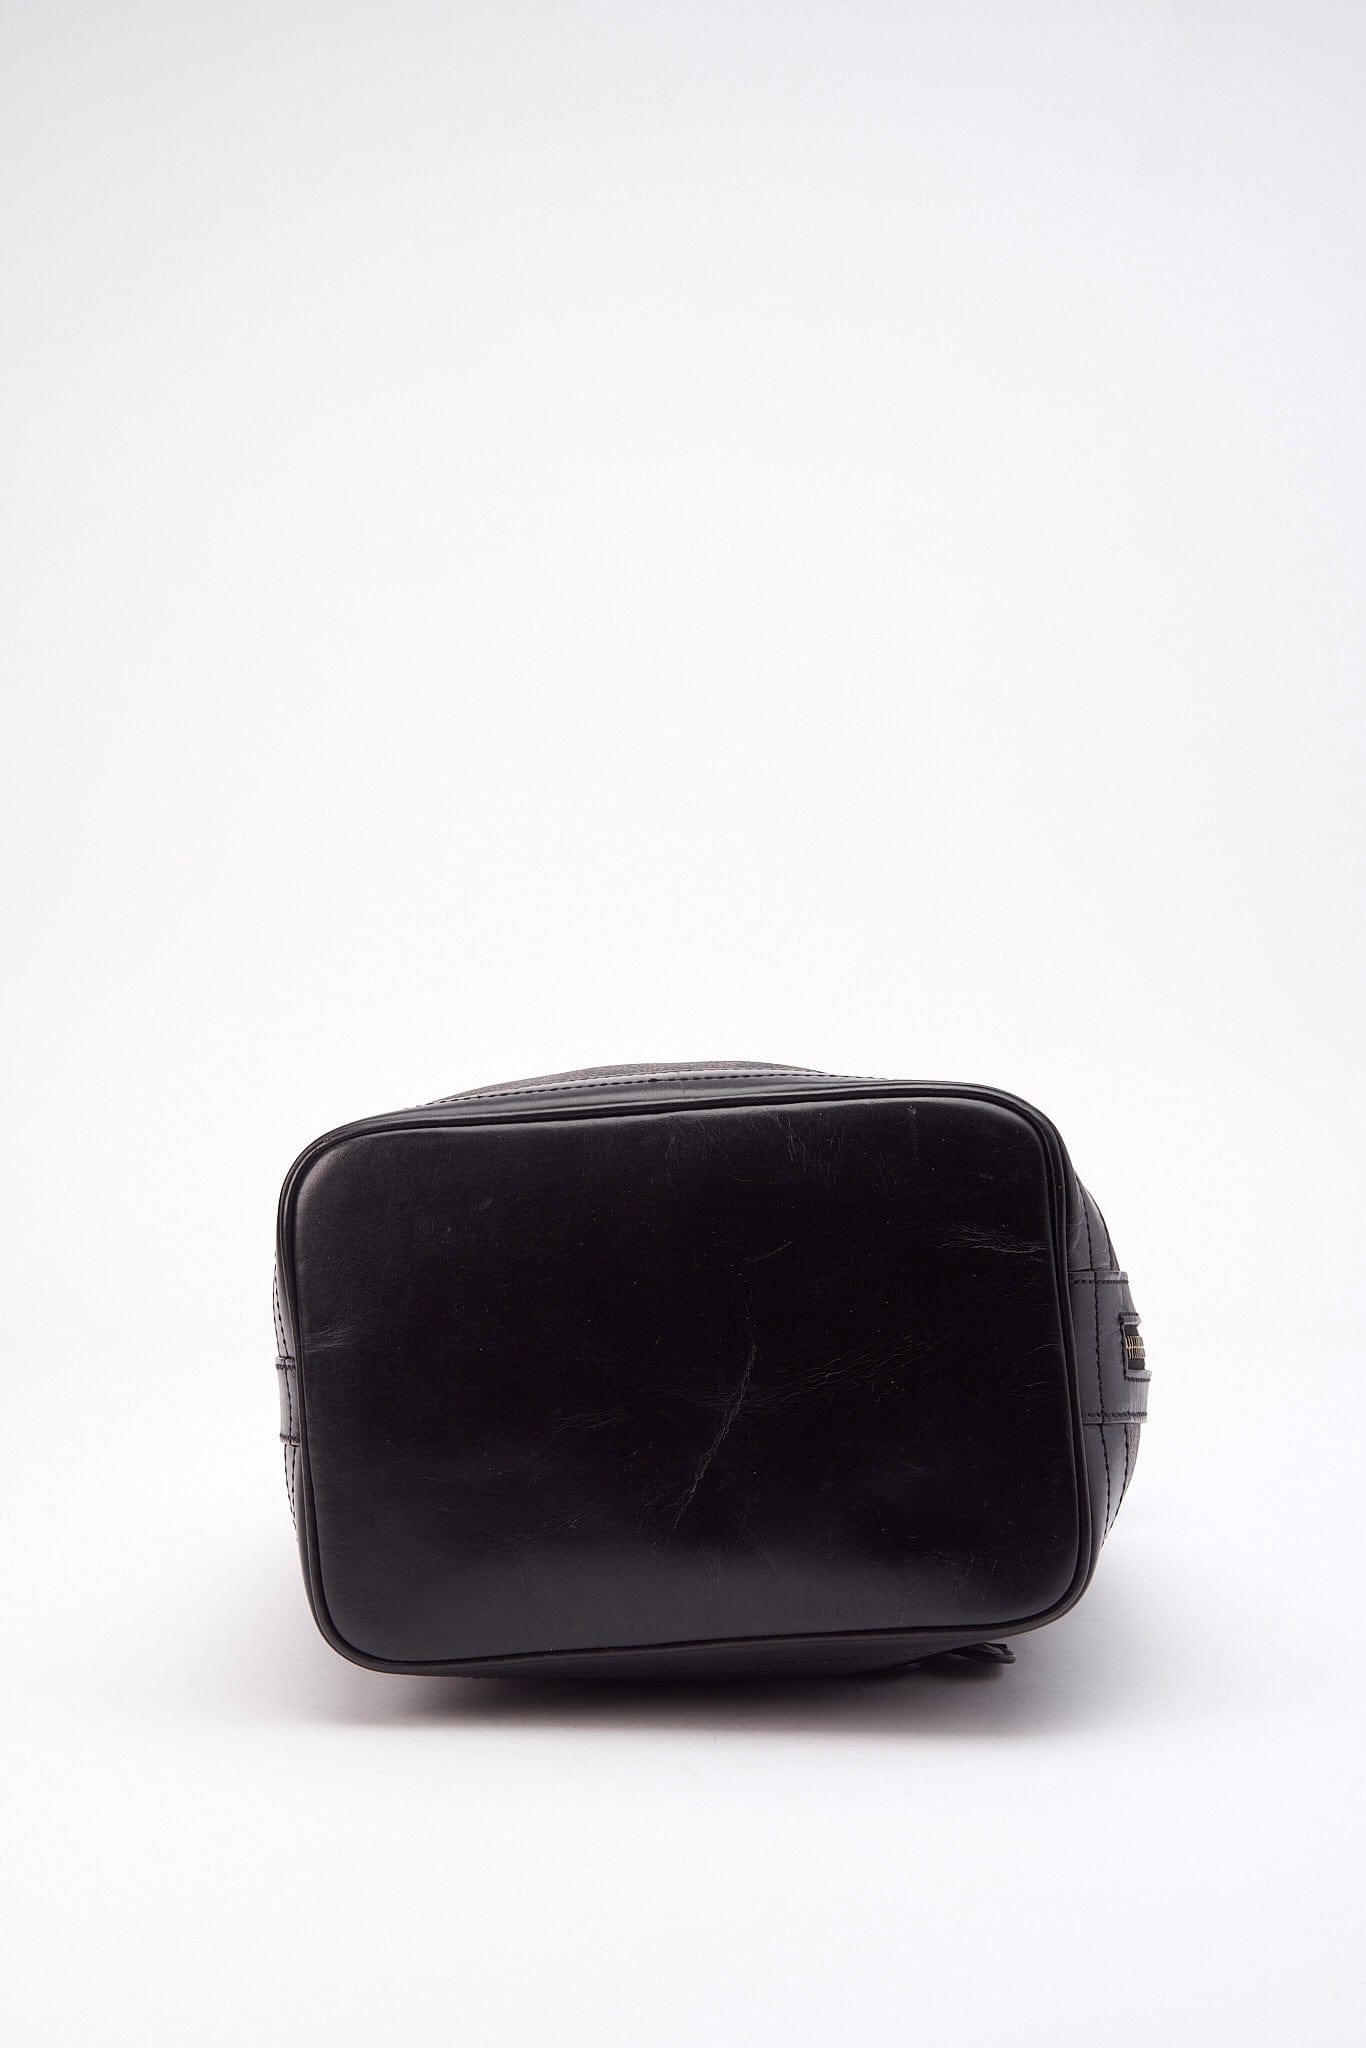 Vintage Celine Triomphe Black Bucket Bag